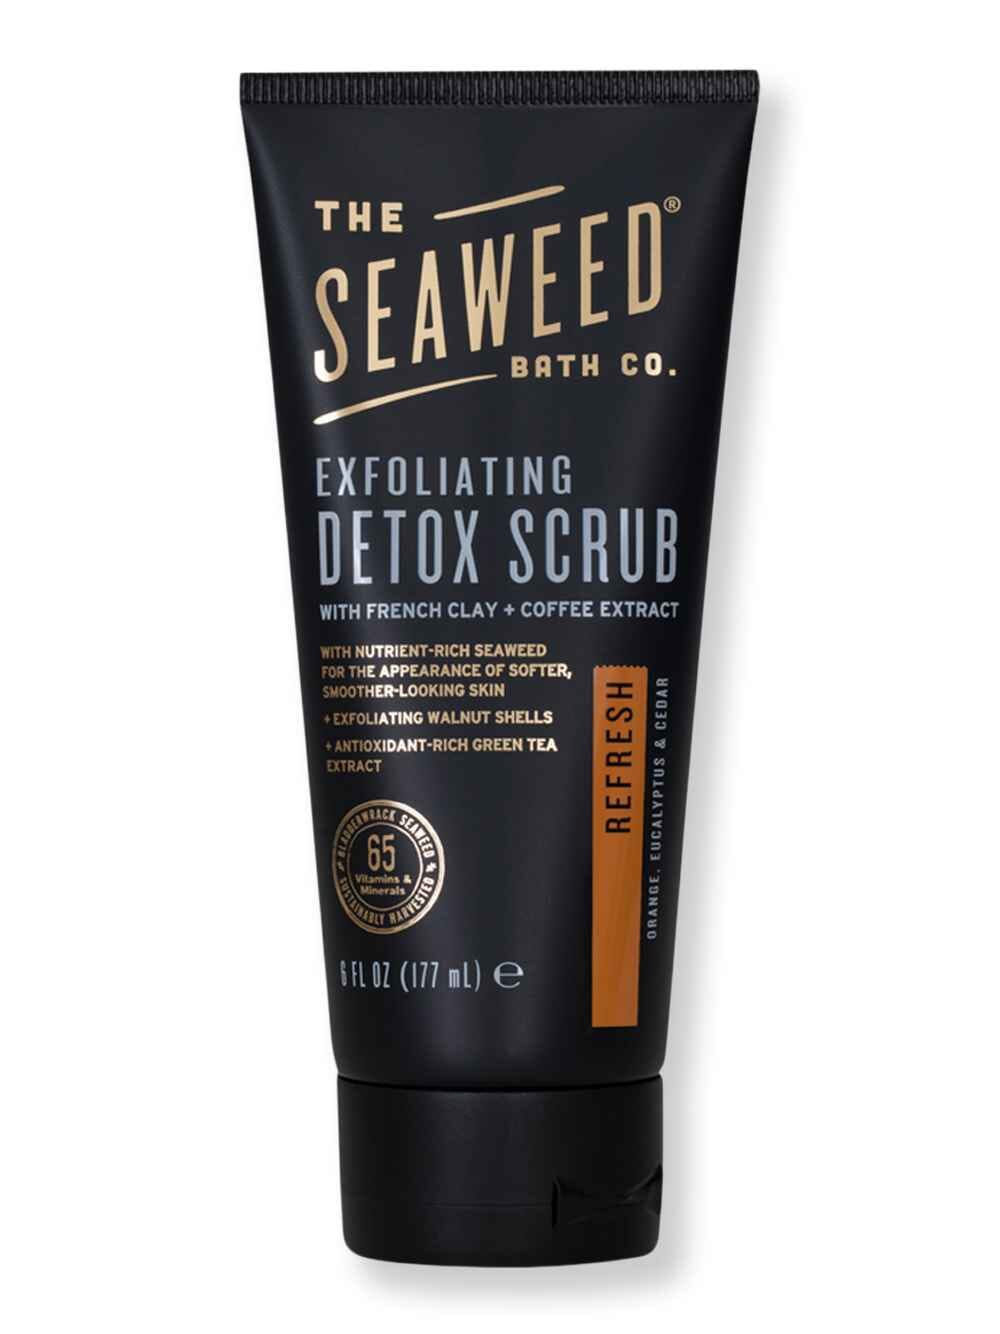 The Seaweed Bath Co. The Seaweed Bath Co. Exfoliating Detox Scrub Refresh 6 oz Body Scrubs & Exfoliants 